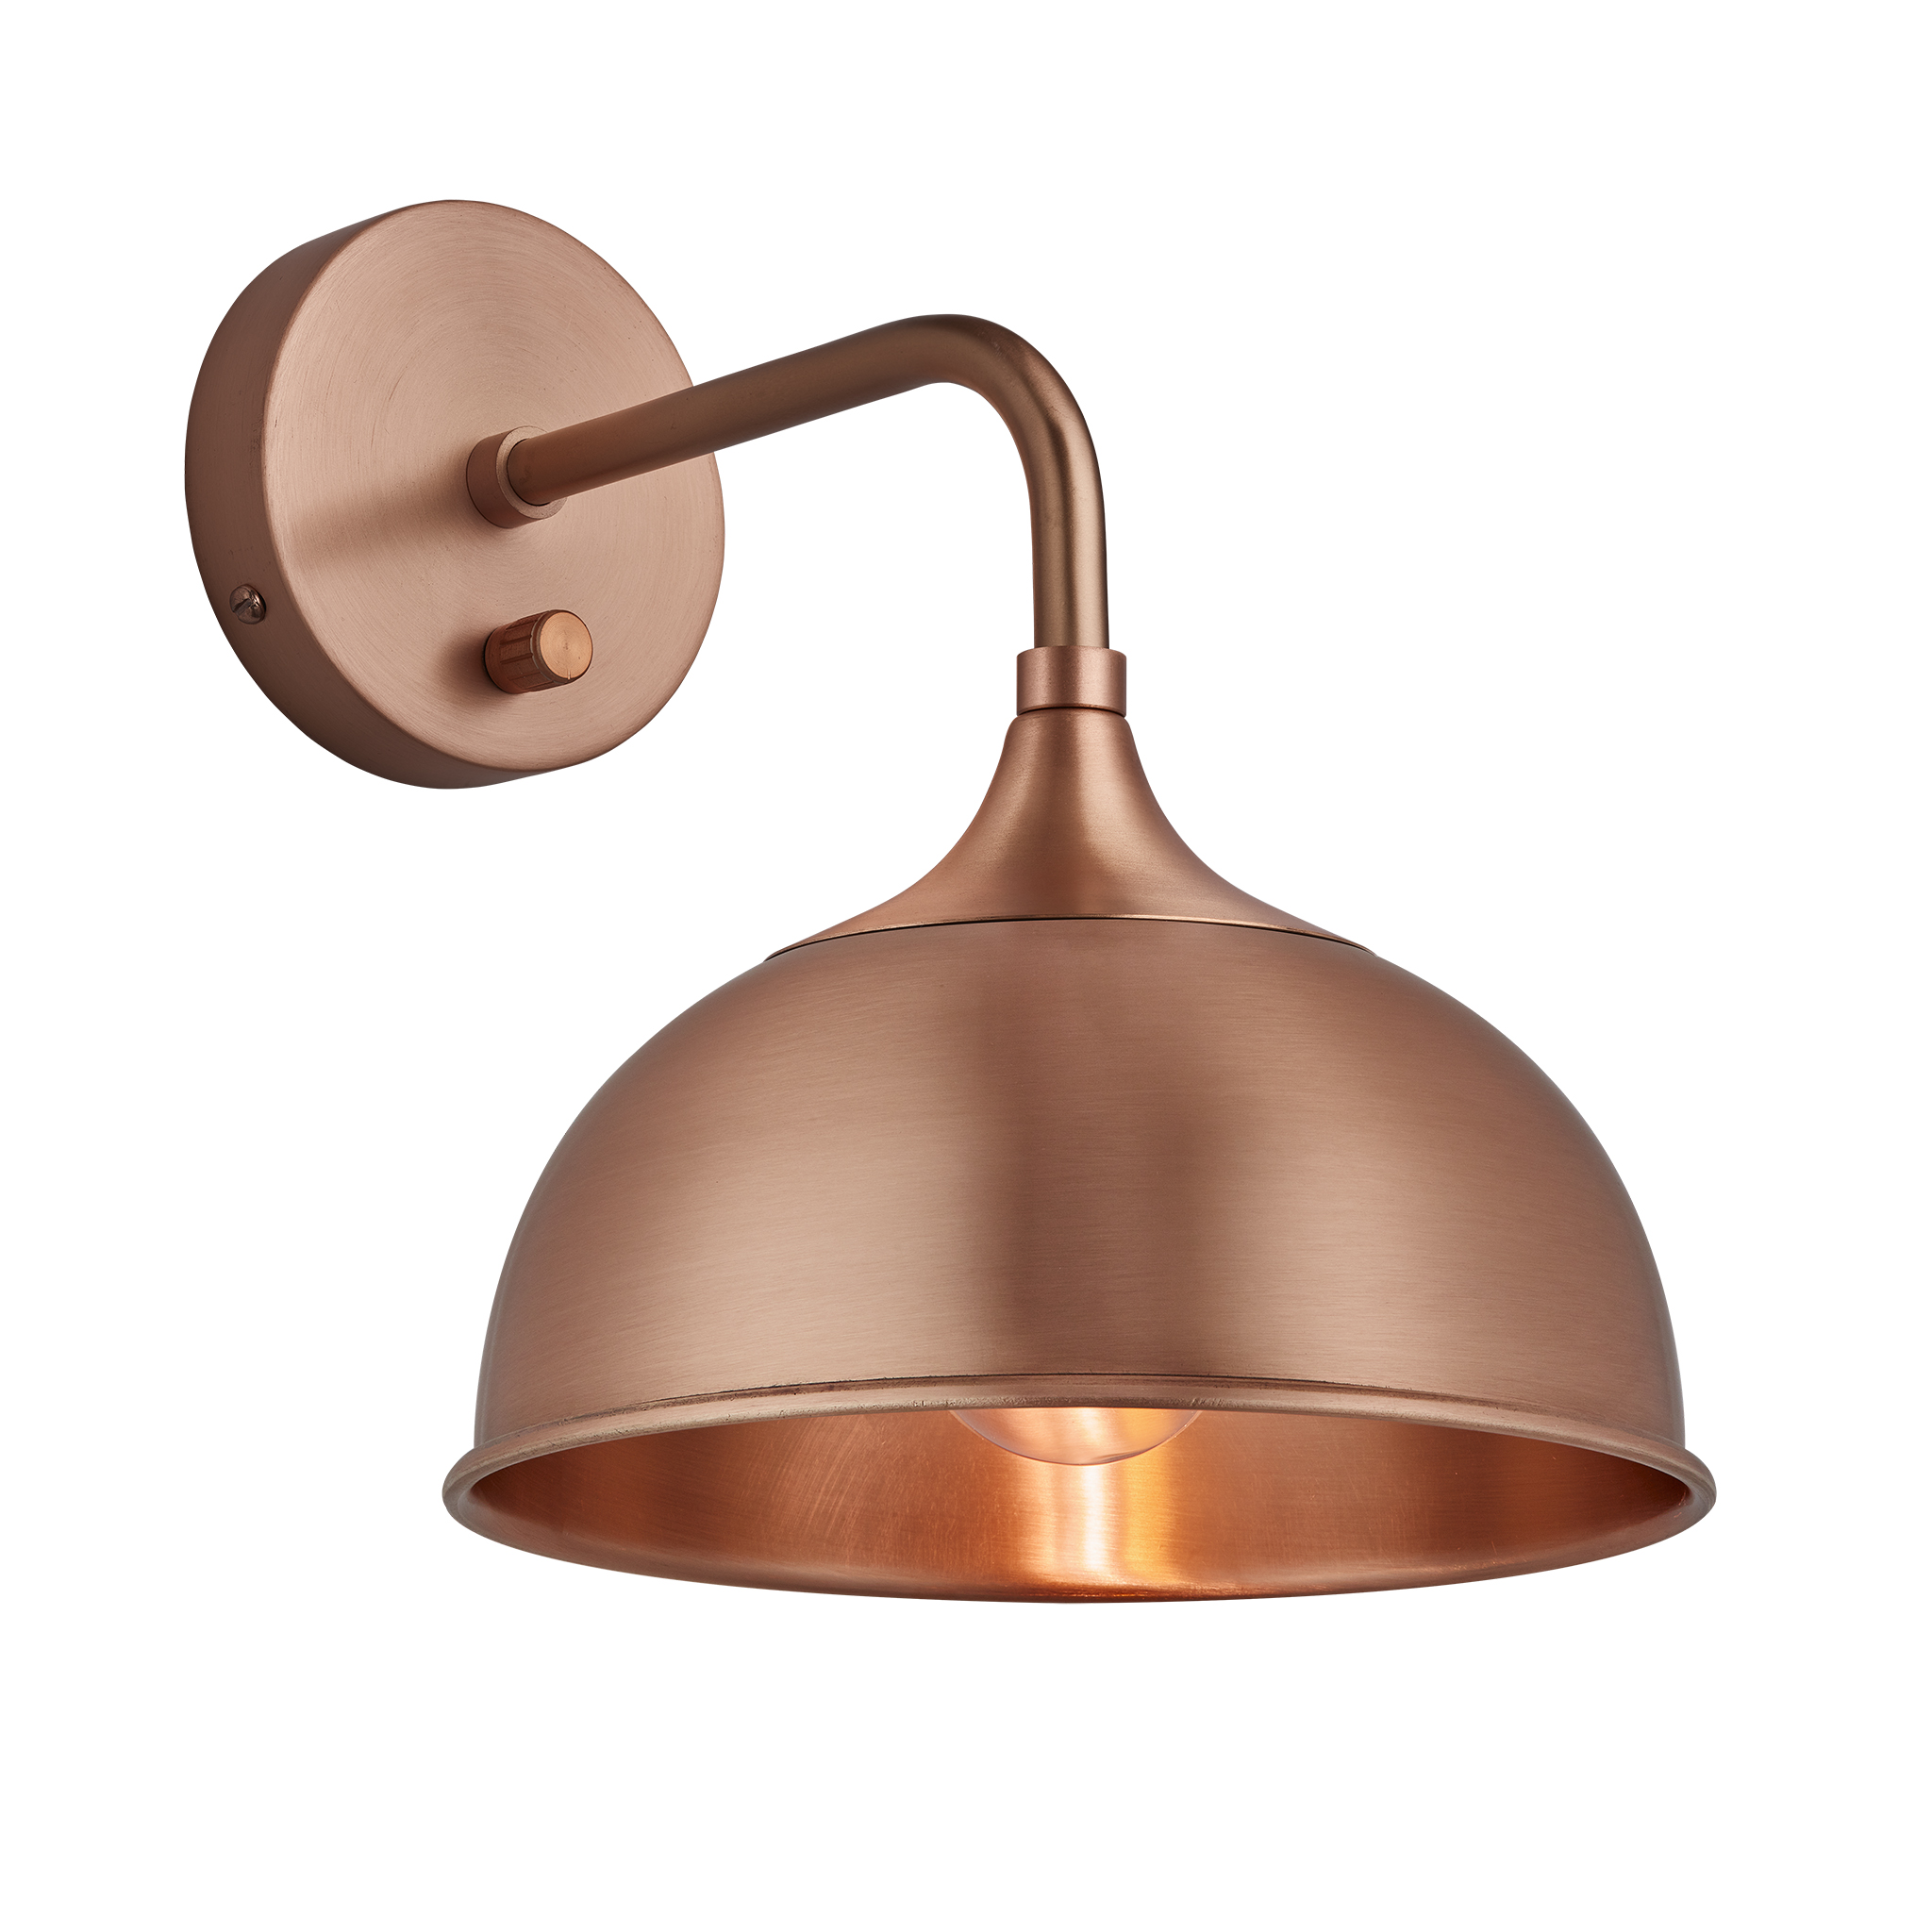 Chelsea Dome Wall Light - 8 Inch - Copper - Copper Holder